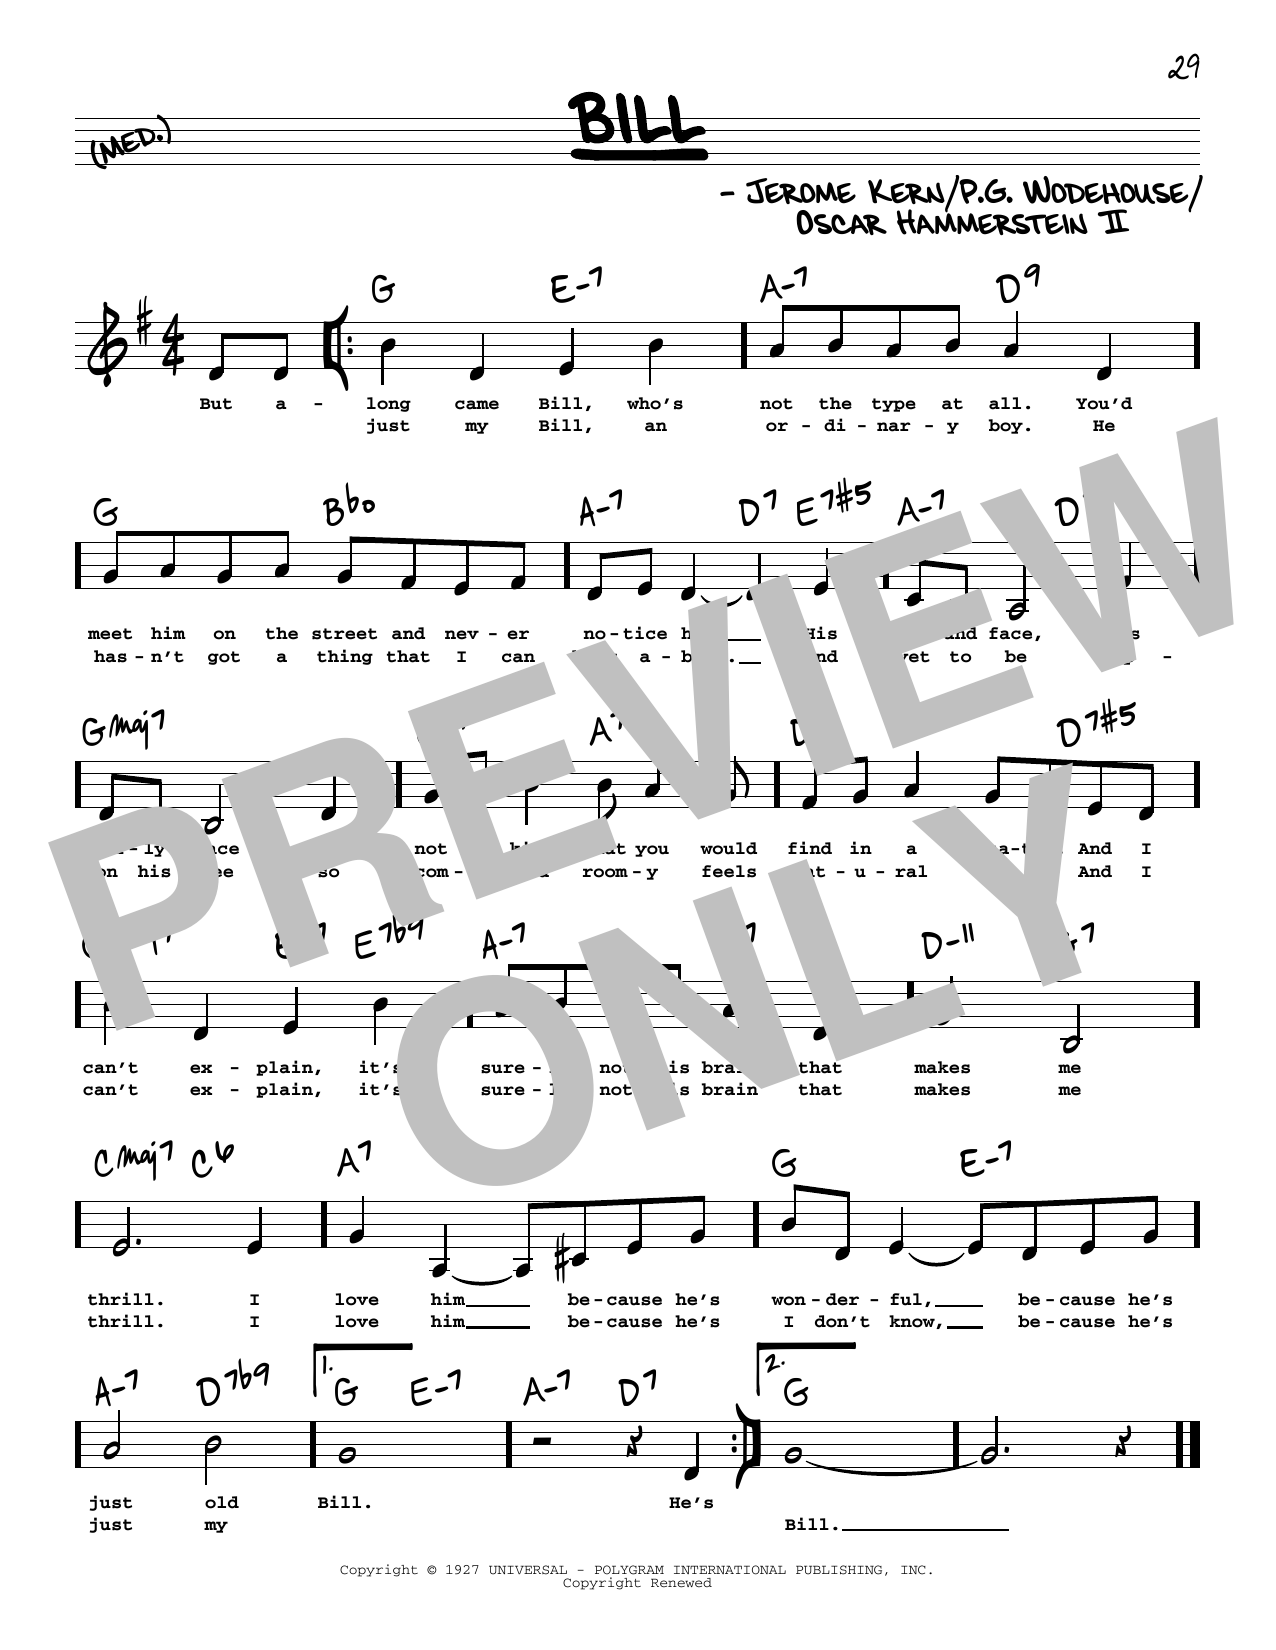 Oscar Hammerstein II Bill (Low Voice) sheet music notes printable PDF score